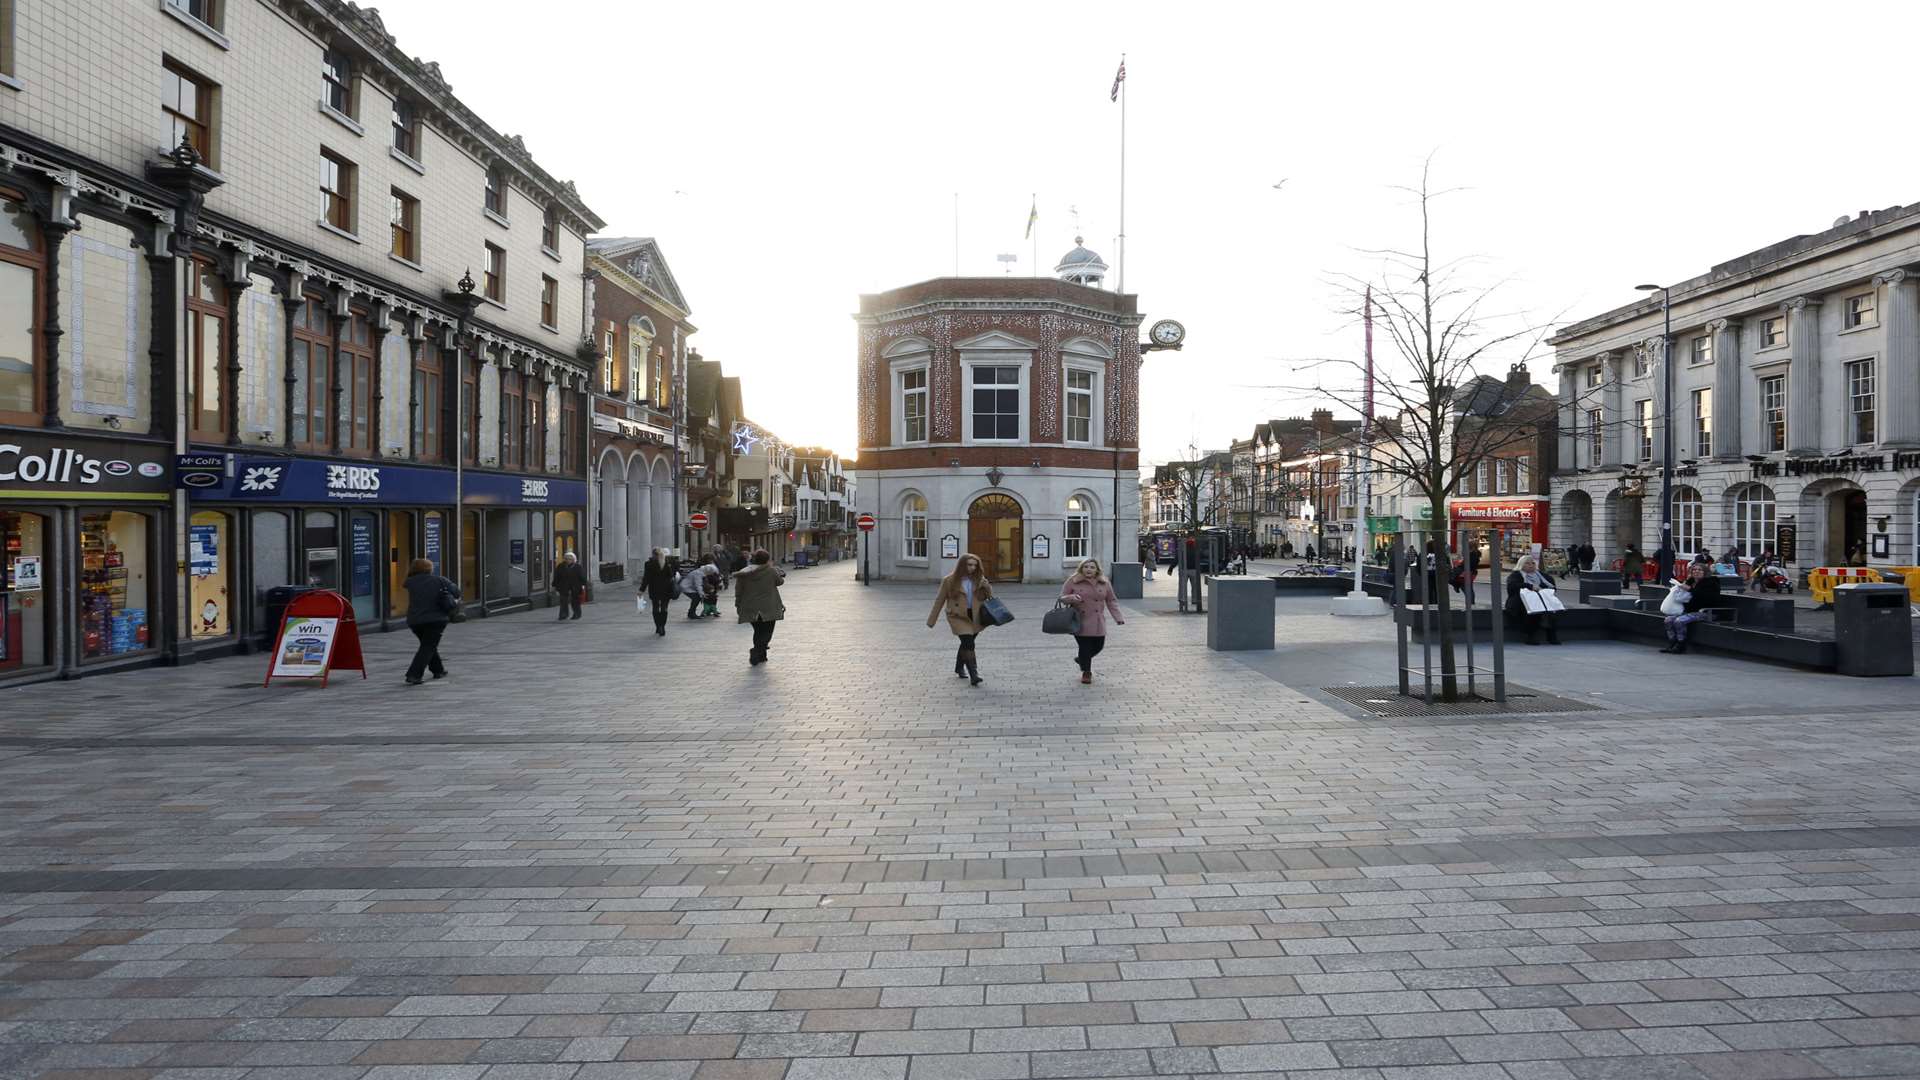 Jubilee Square in Maidstone